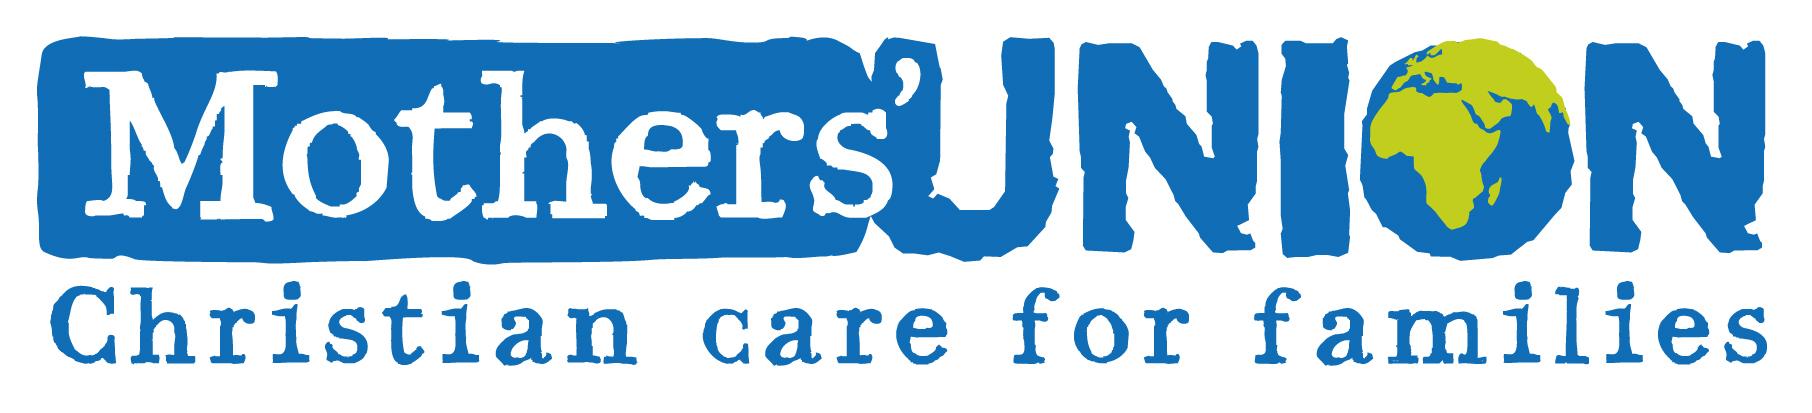 mothers union logo